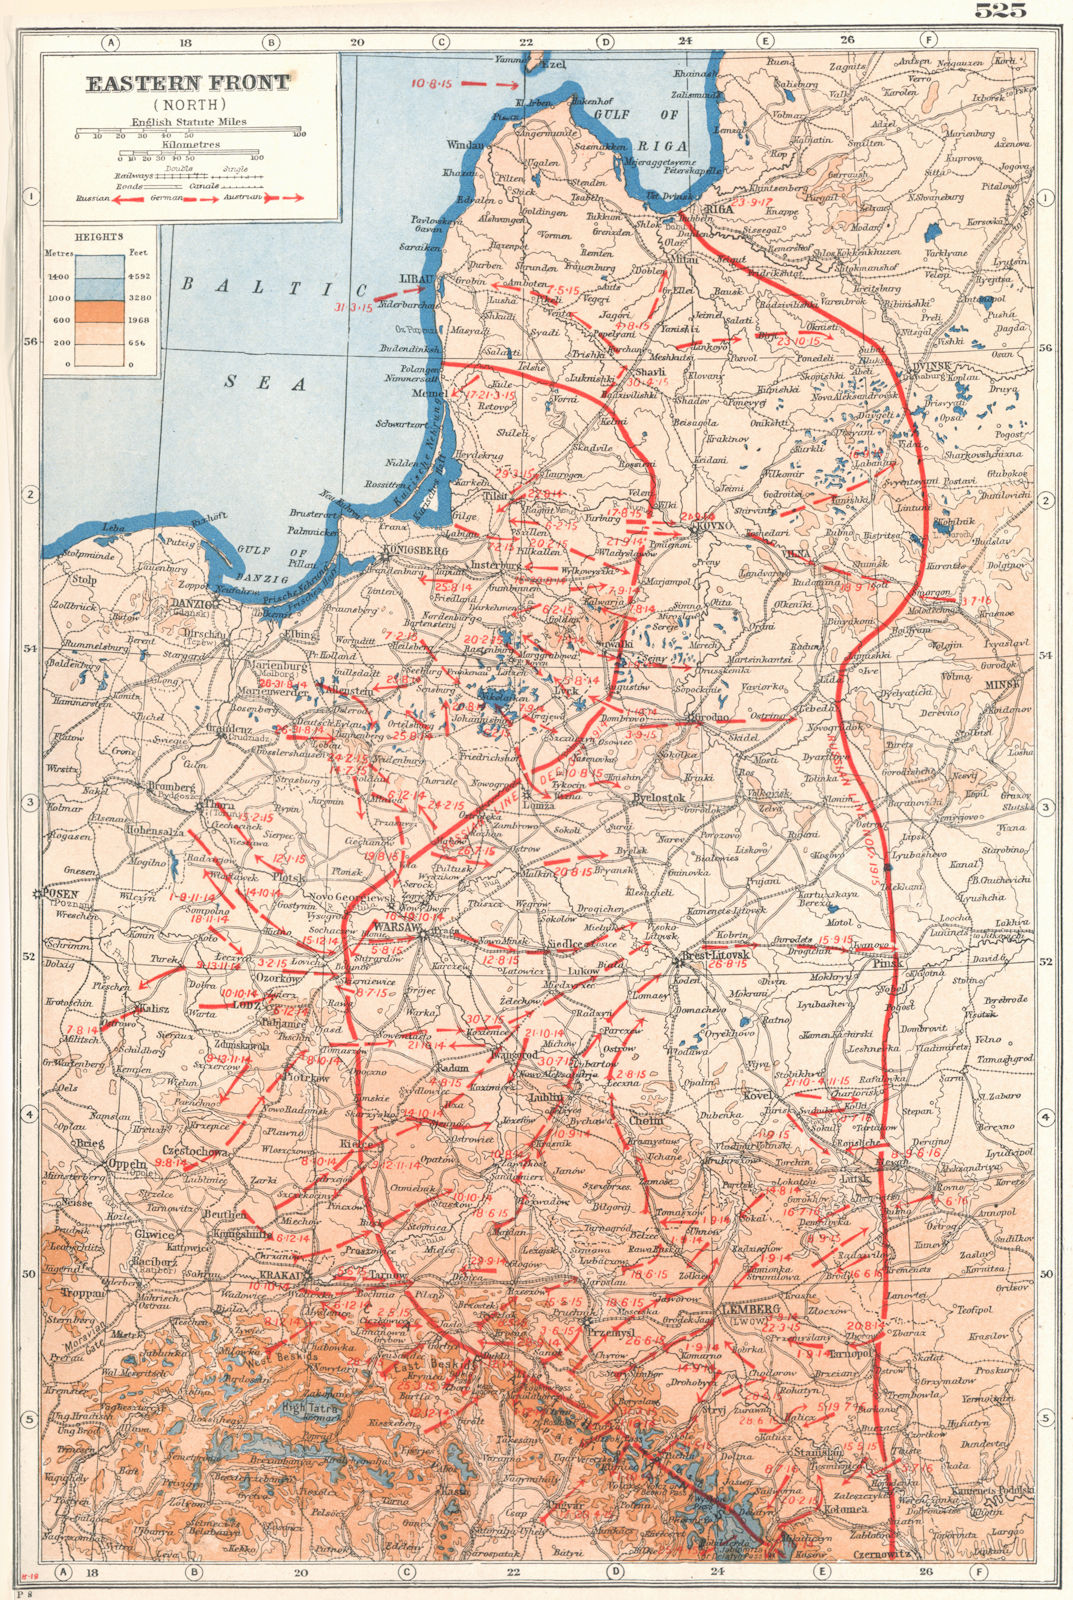 WW1  EASTERN FRONT. Belarus Baltics Poland Battle lines 1914-16 1920 old map